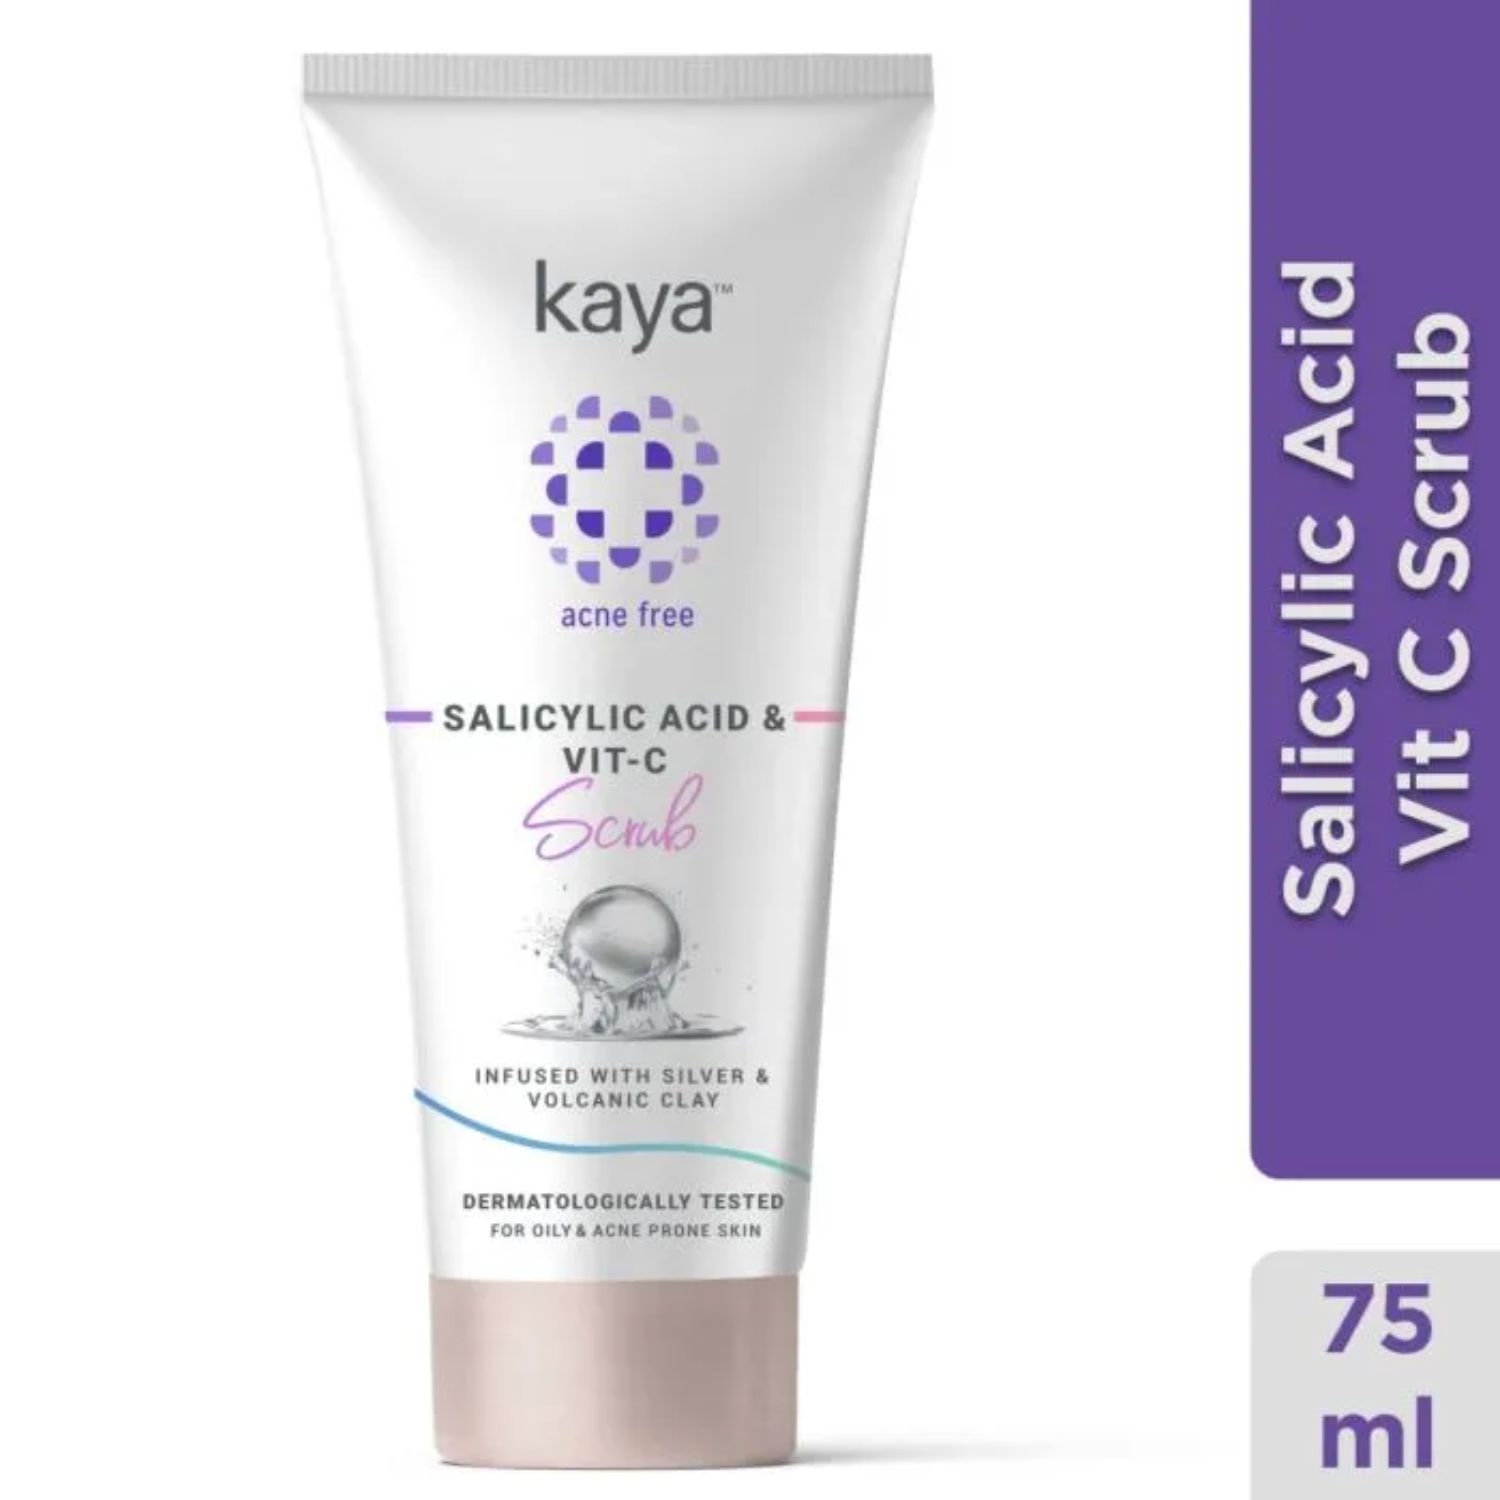 KAYA Salicylic Acid Vitamin C Scrub Infused with Silver & Volcanic Clay (75ml)